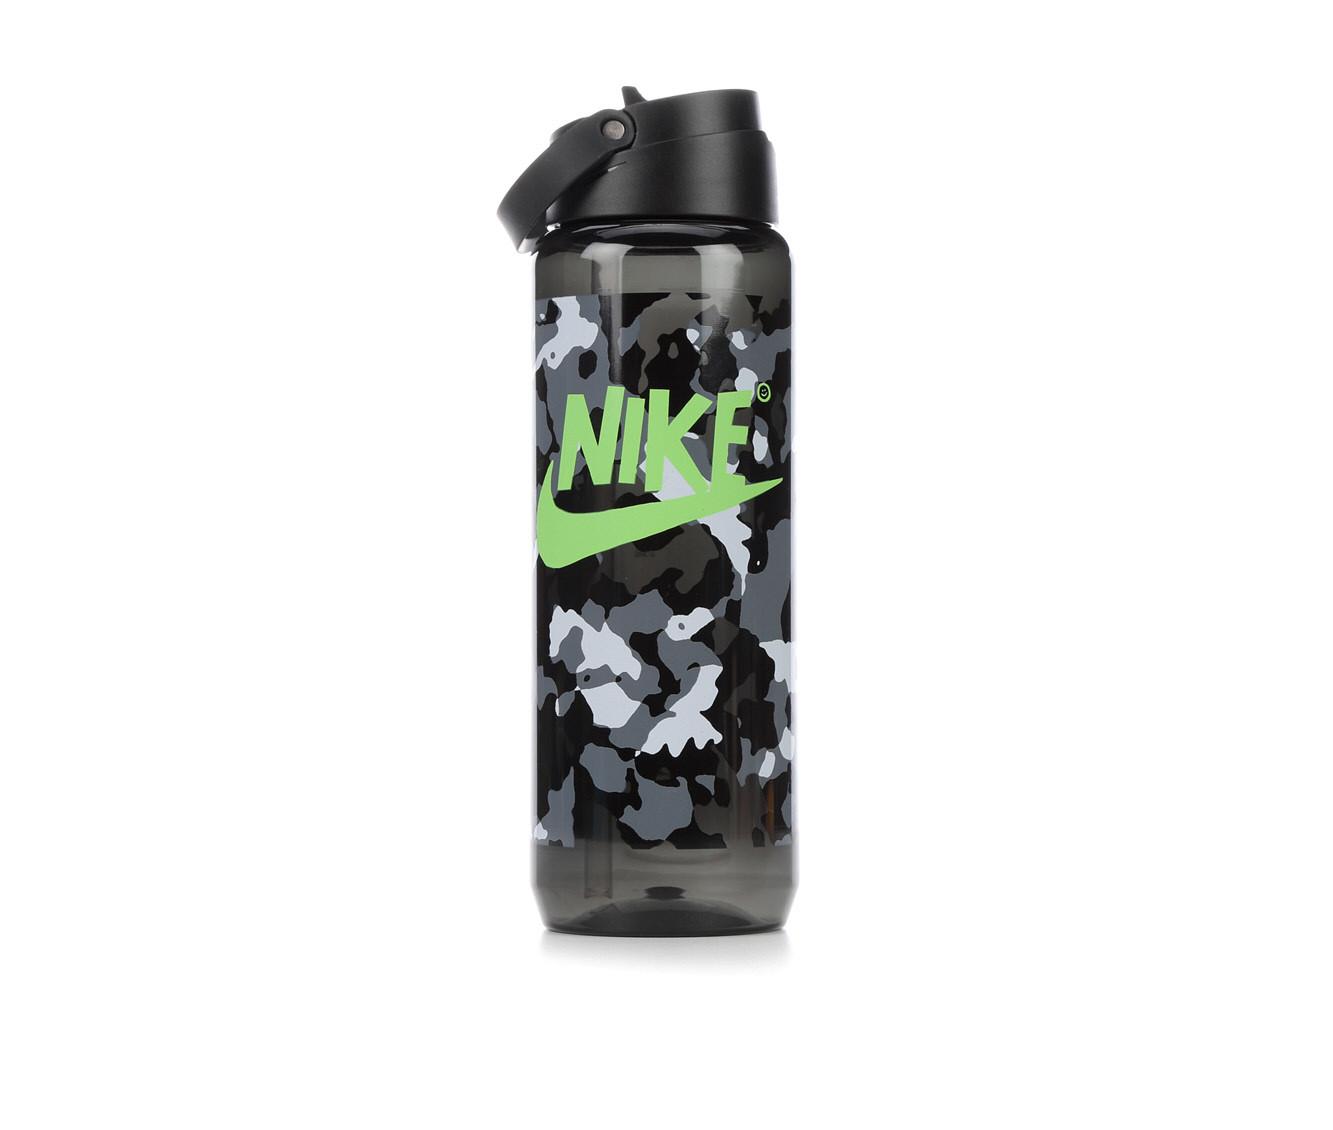 Nike Recharge 24 oz. Stainless Steel Chug Bottle